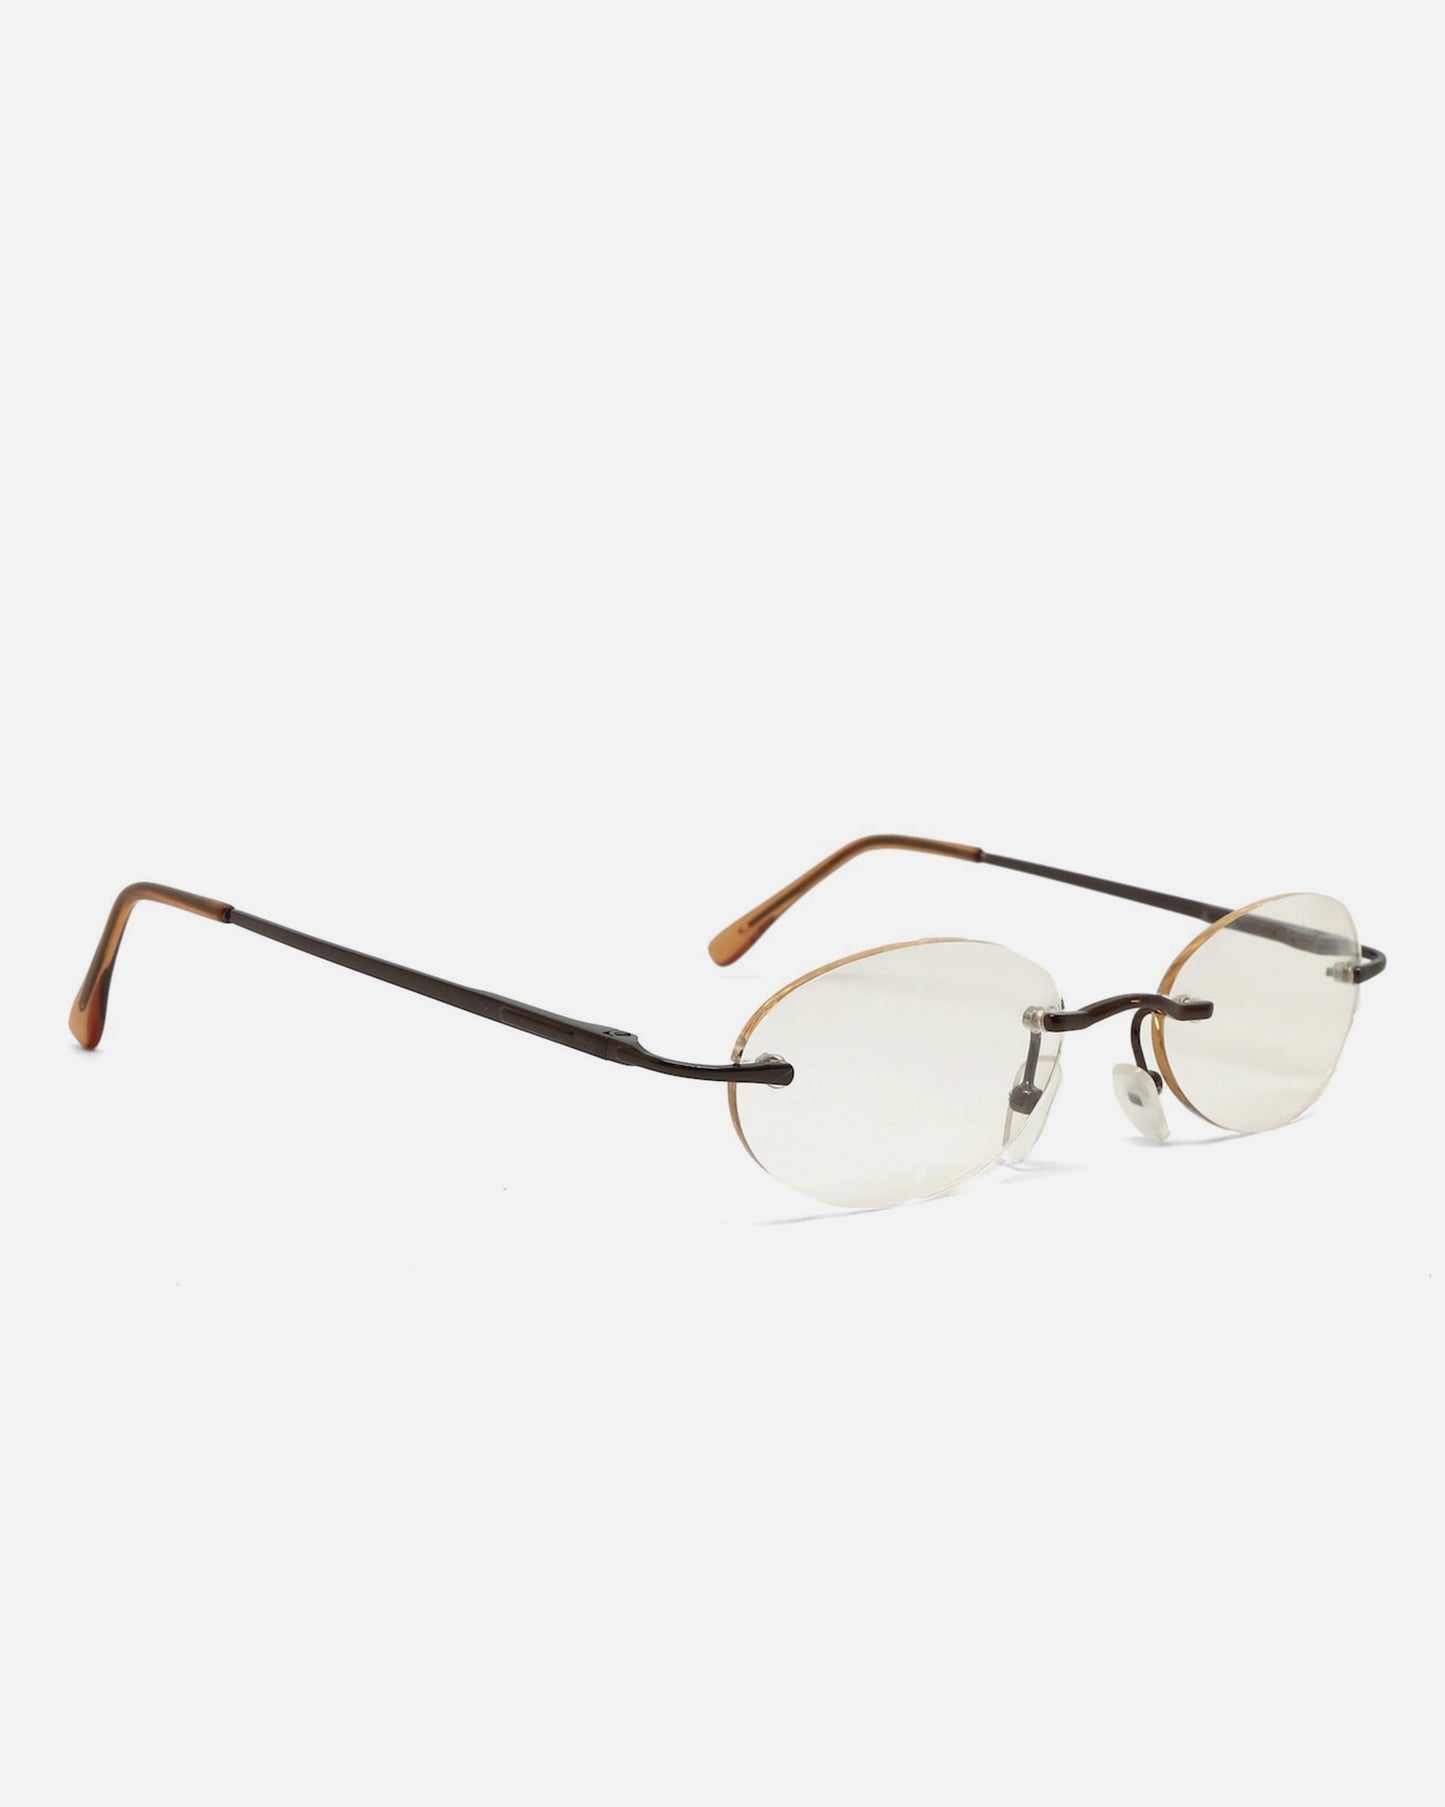 NOS Made Light Brown Lens Frameless Sunglasses